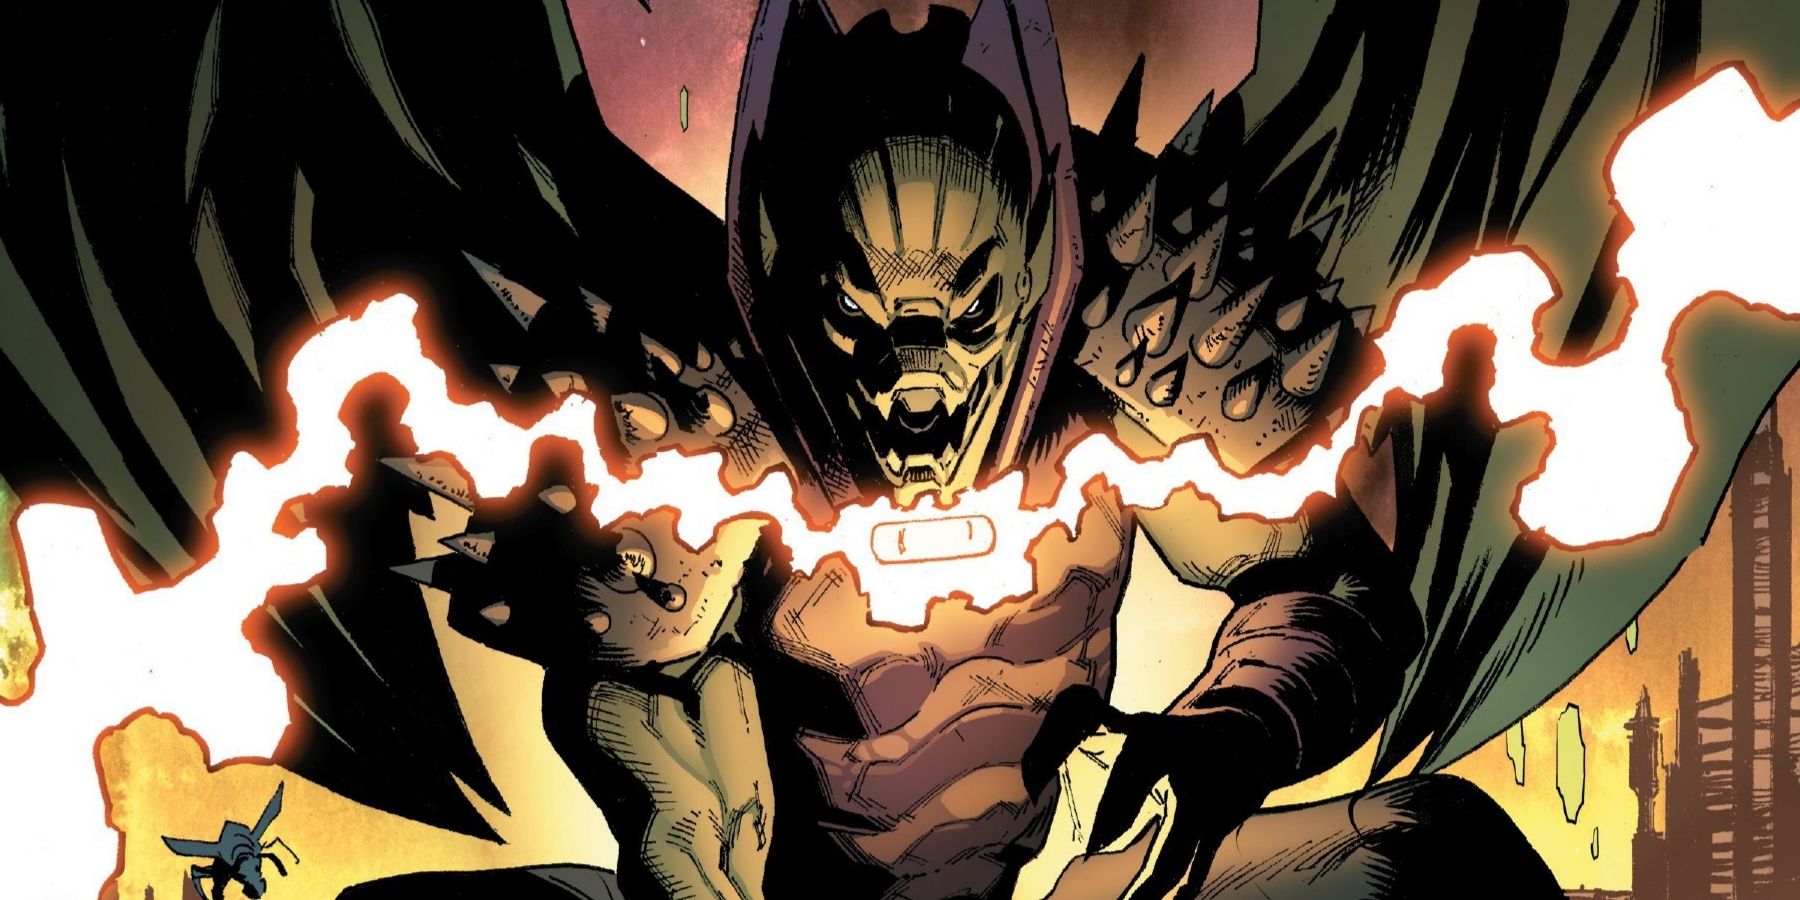 Annihilus uses his powers in Marvel Comics.